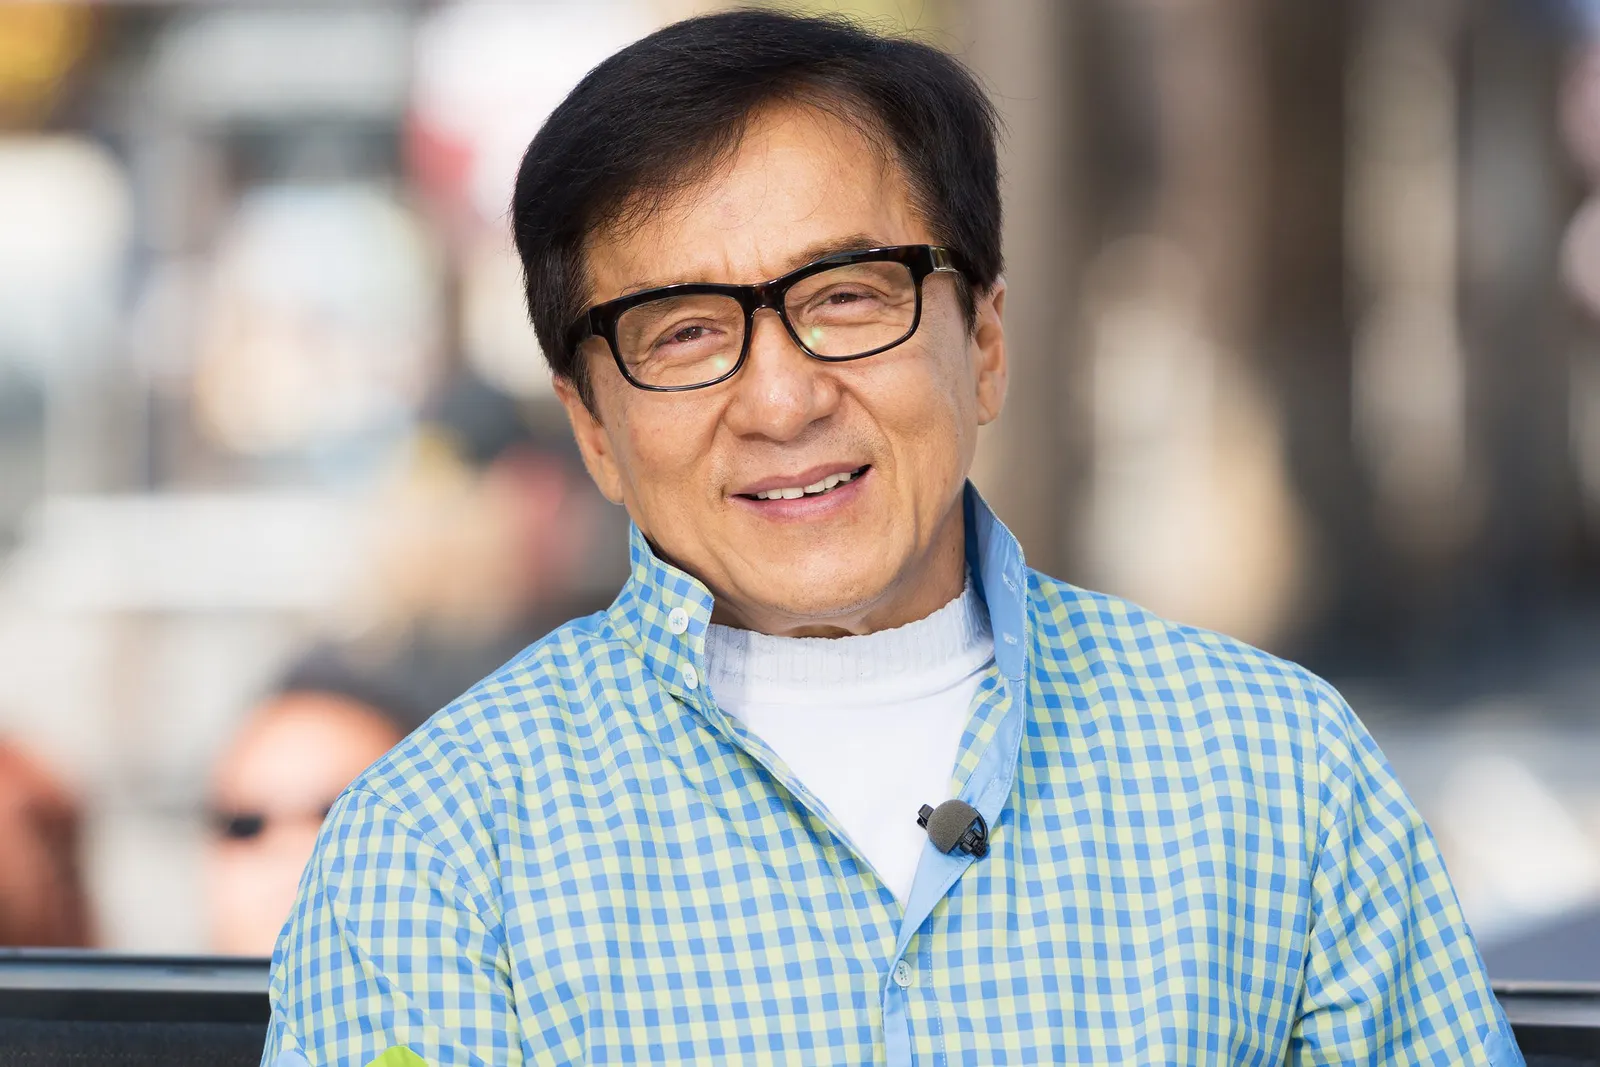 Heboh, Ini 5 Hal Kontroversial Seputar Kehidupan Pribadi Jackie Chan